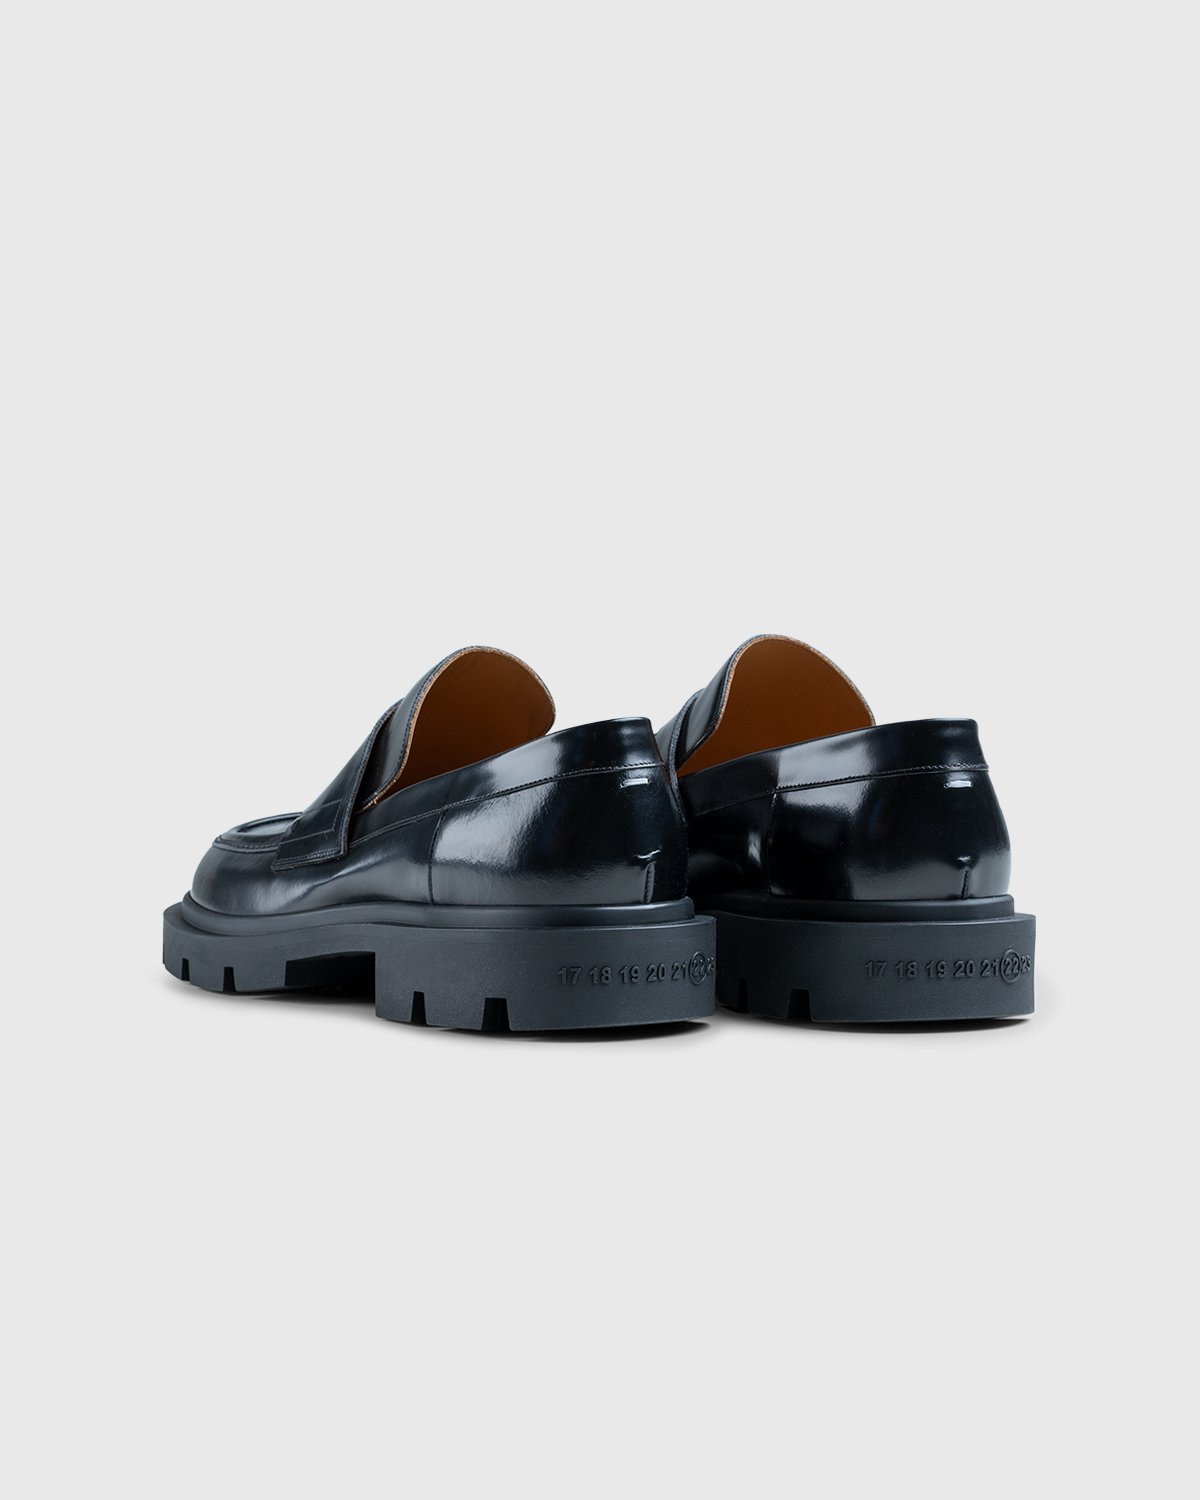 Maison Margiela - Leather Loafers Black - Footwear - Black - Image 3